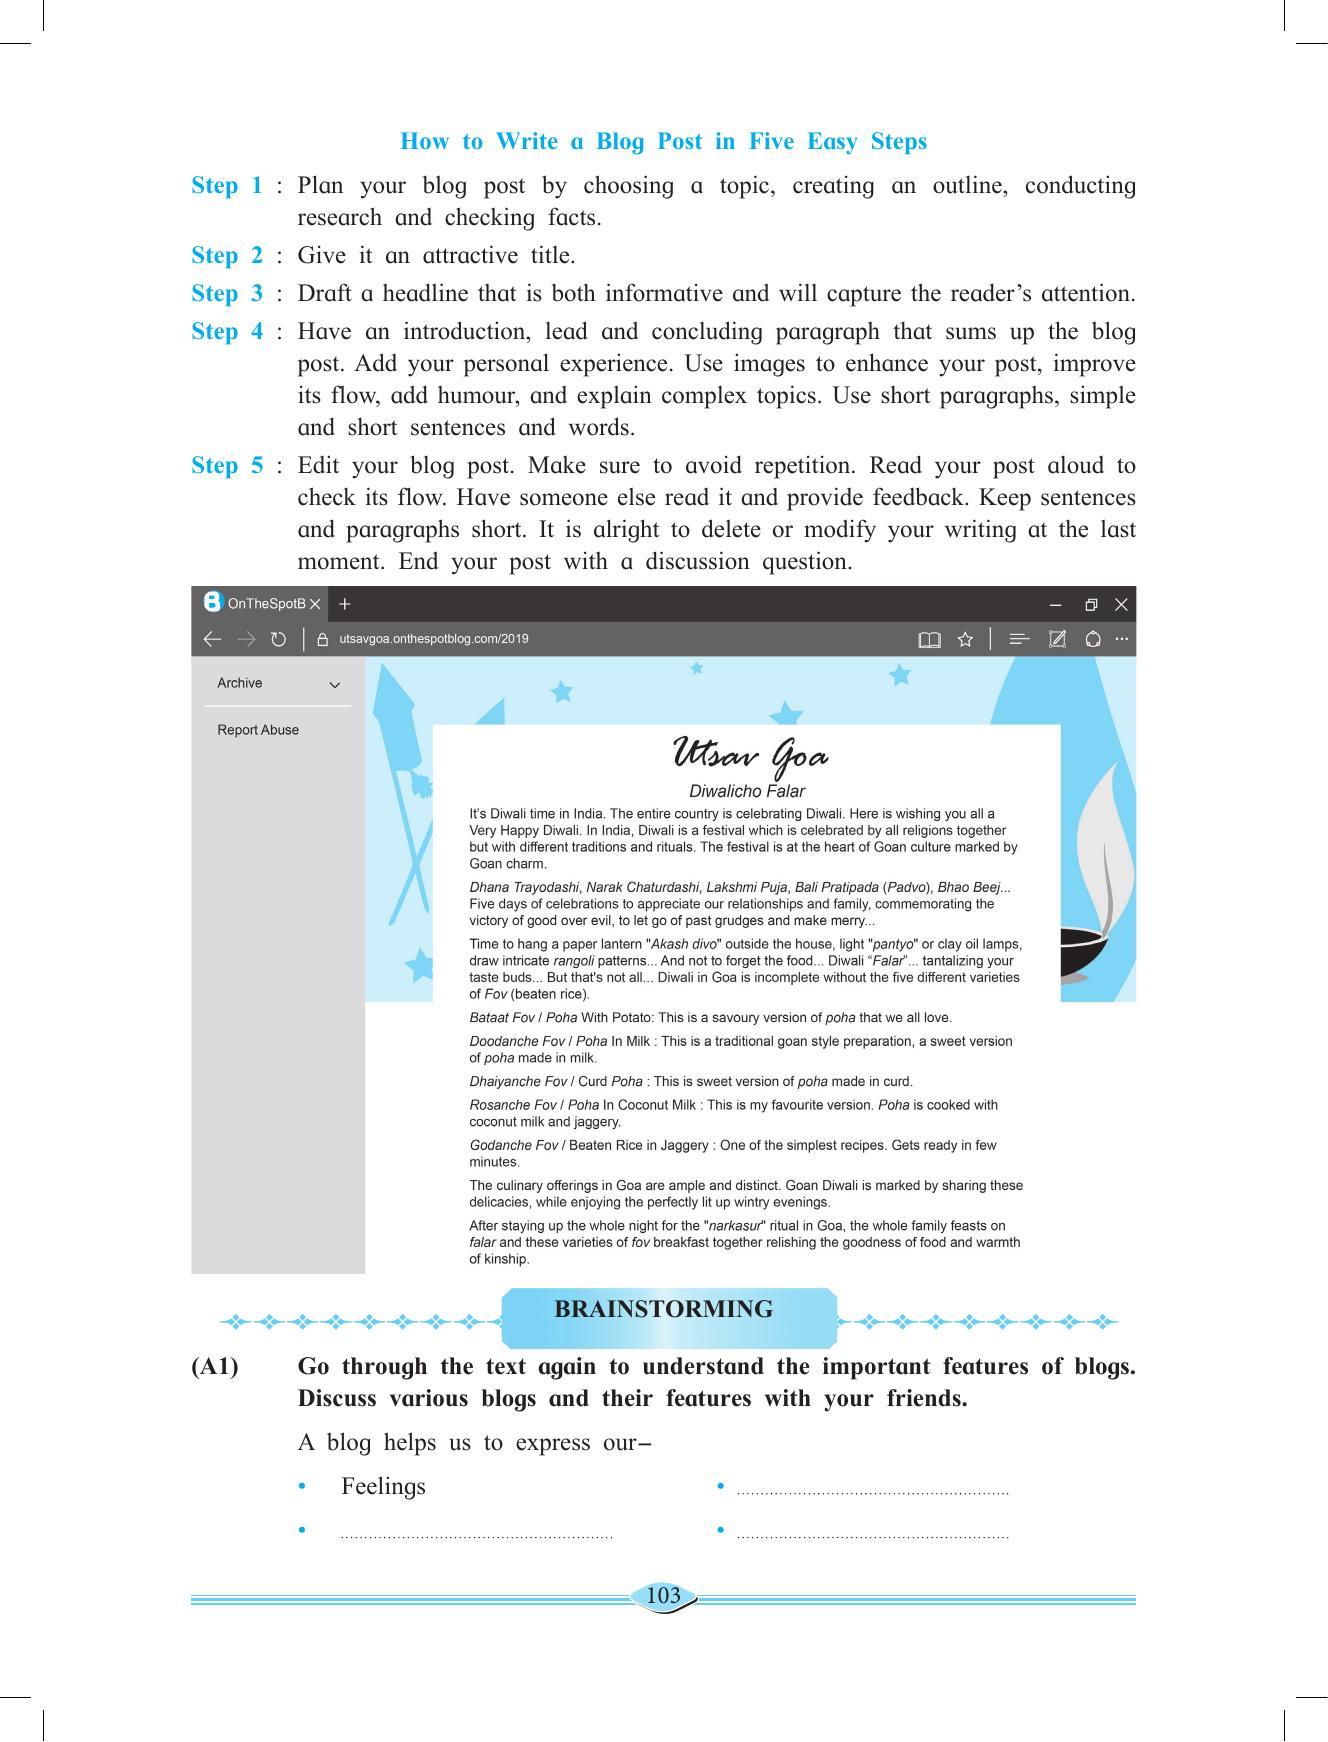 Maharashtra Board Class 11 English Textbook - Page 117